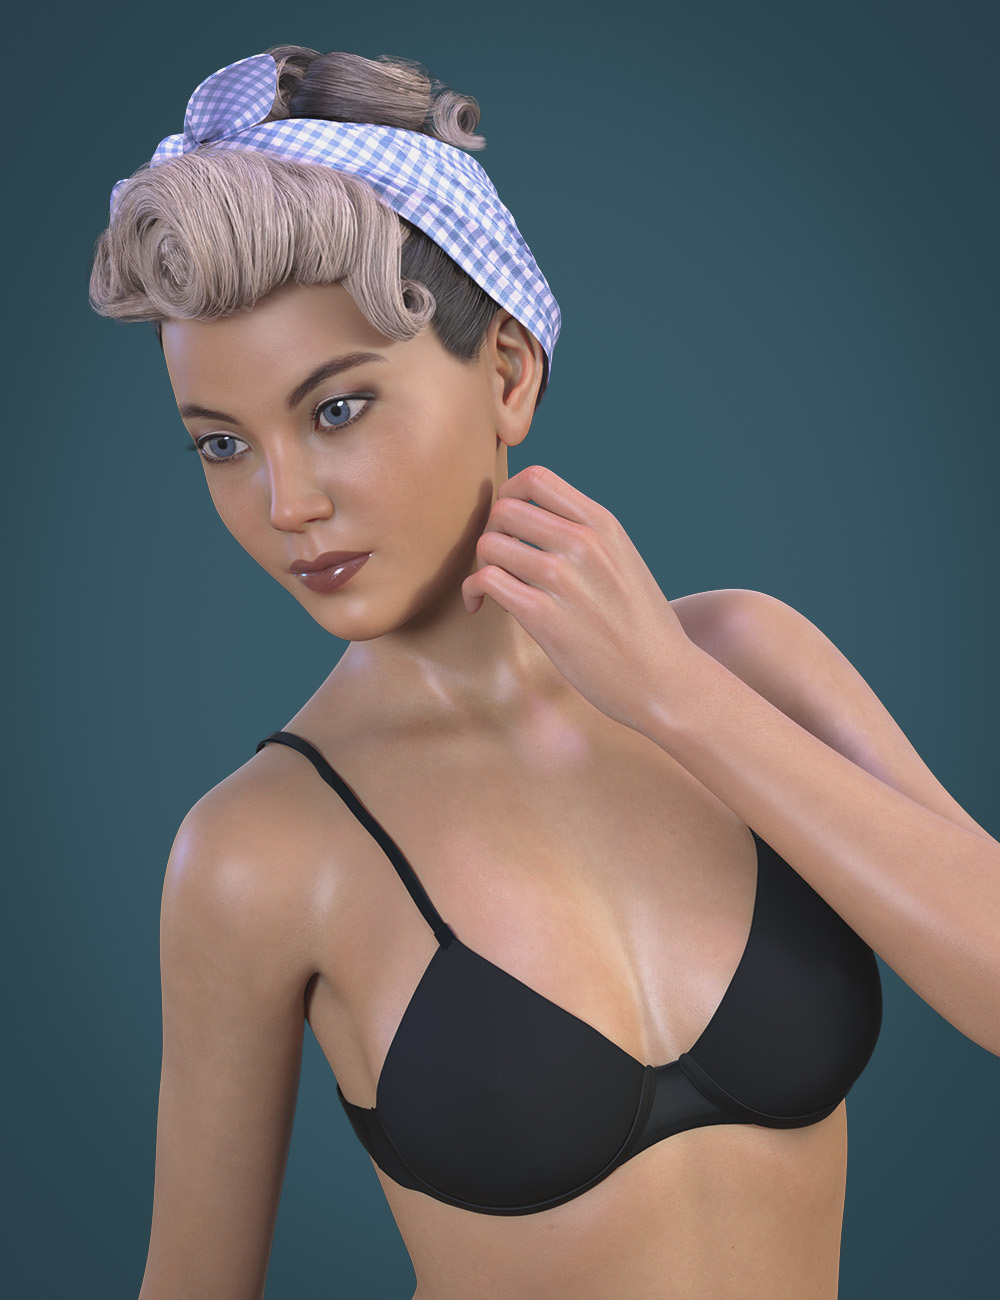 Lillian For Genesis 8 Female by: dx30, 3D Models by Daz 3D